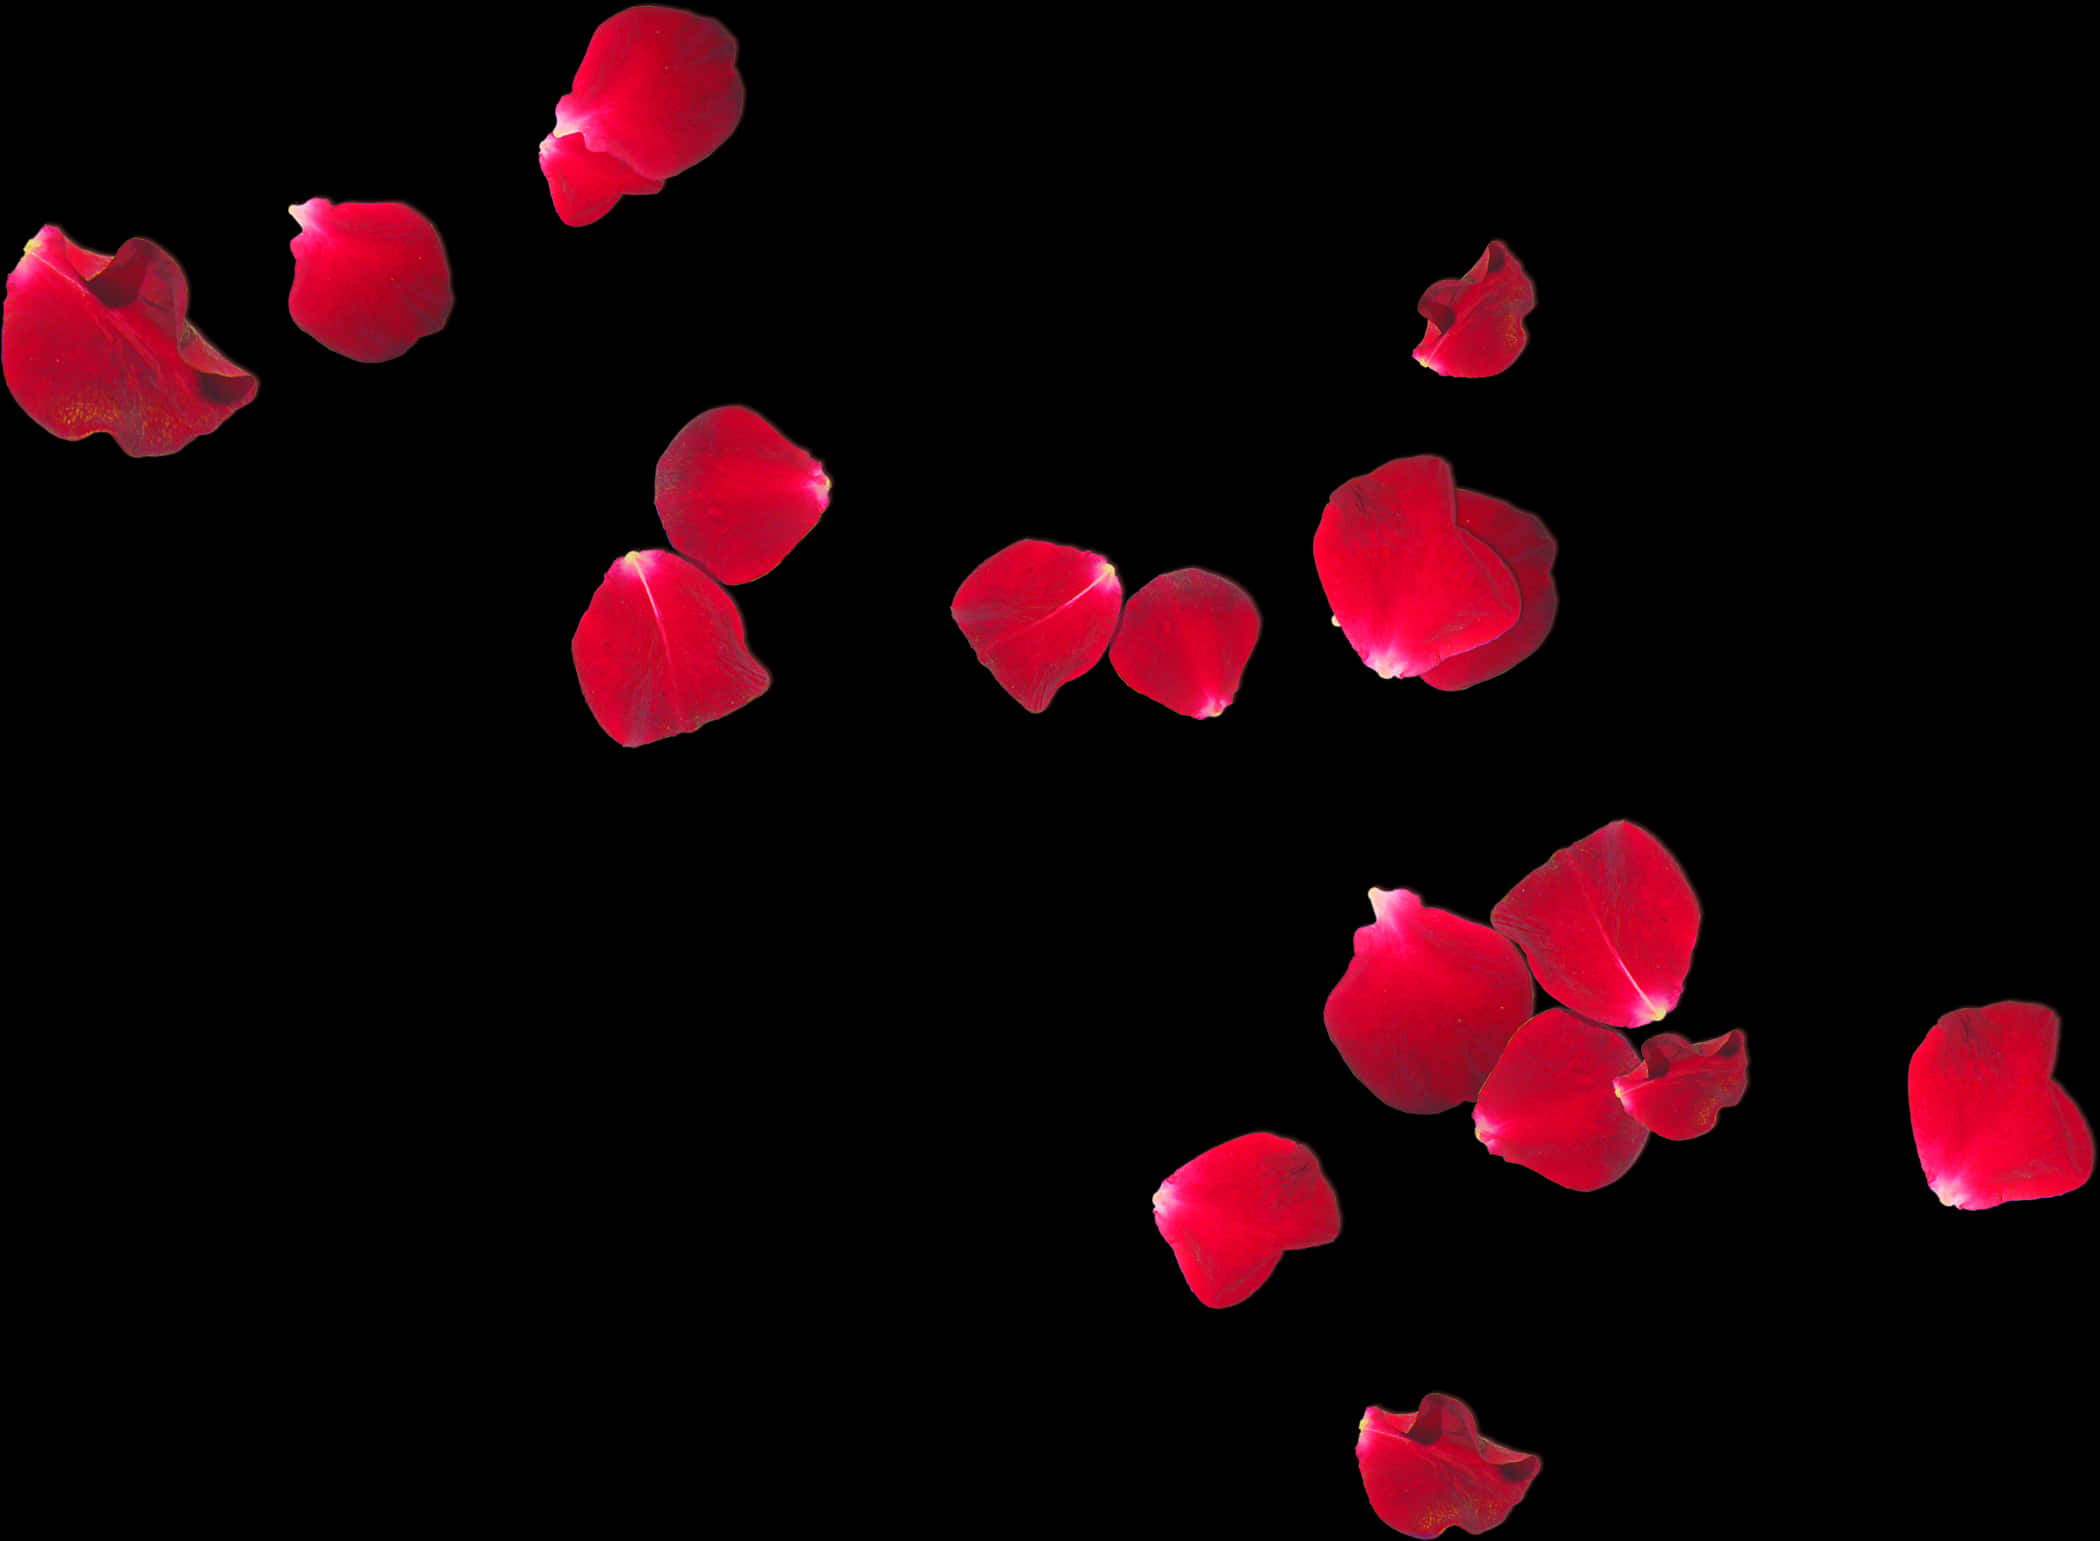 Red Rose Petals Fallingon Black Background